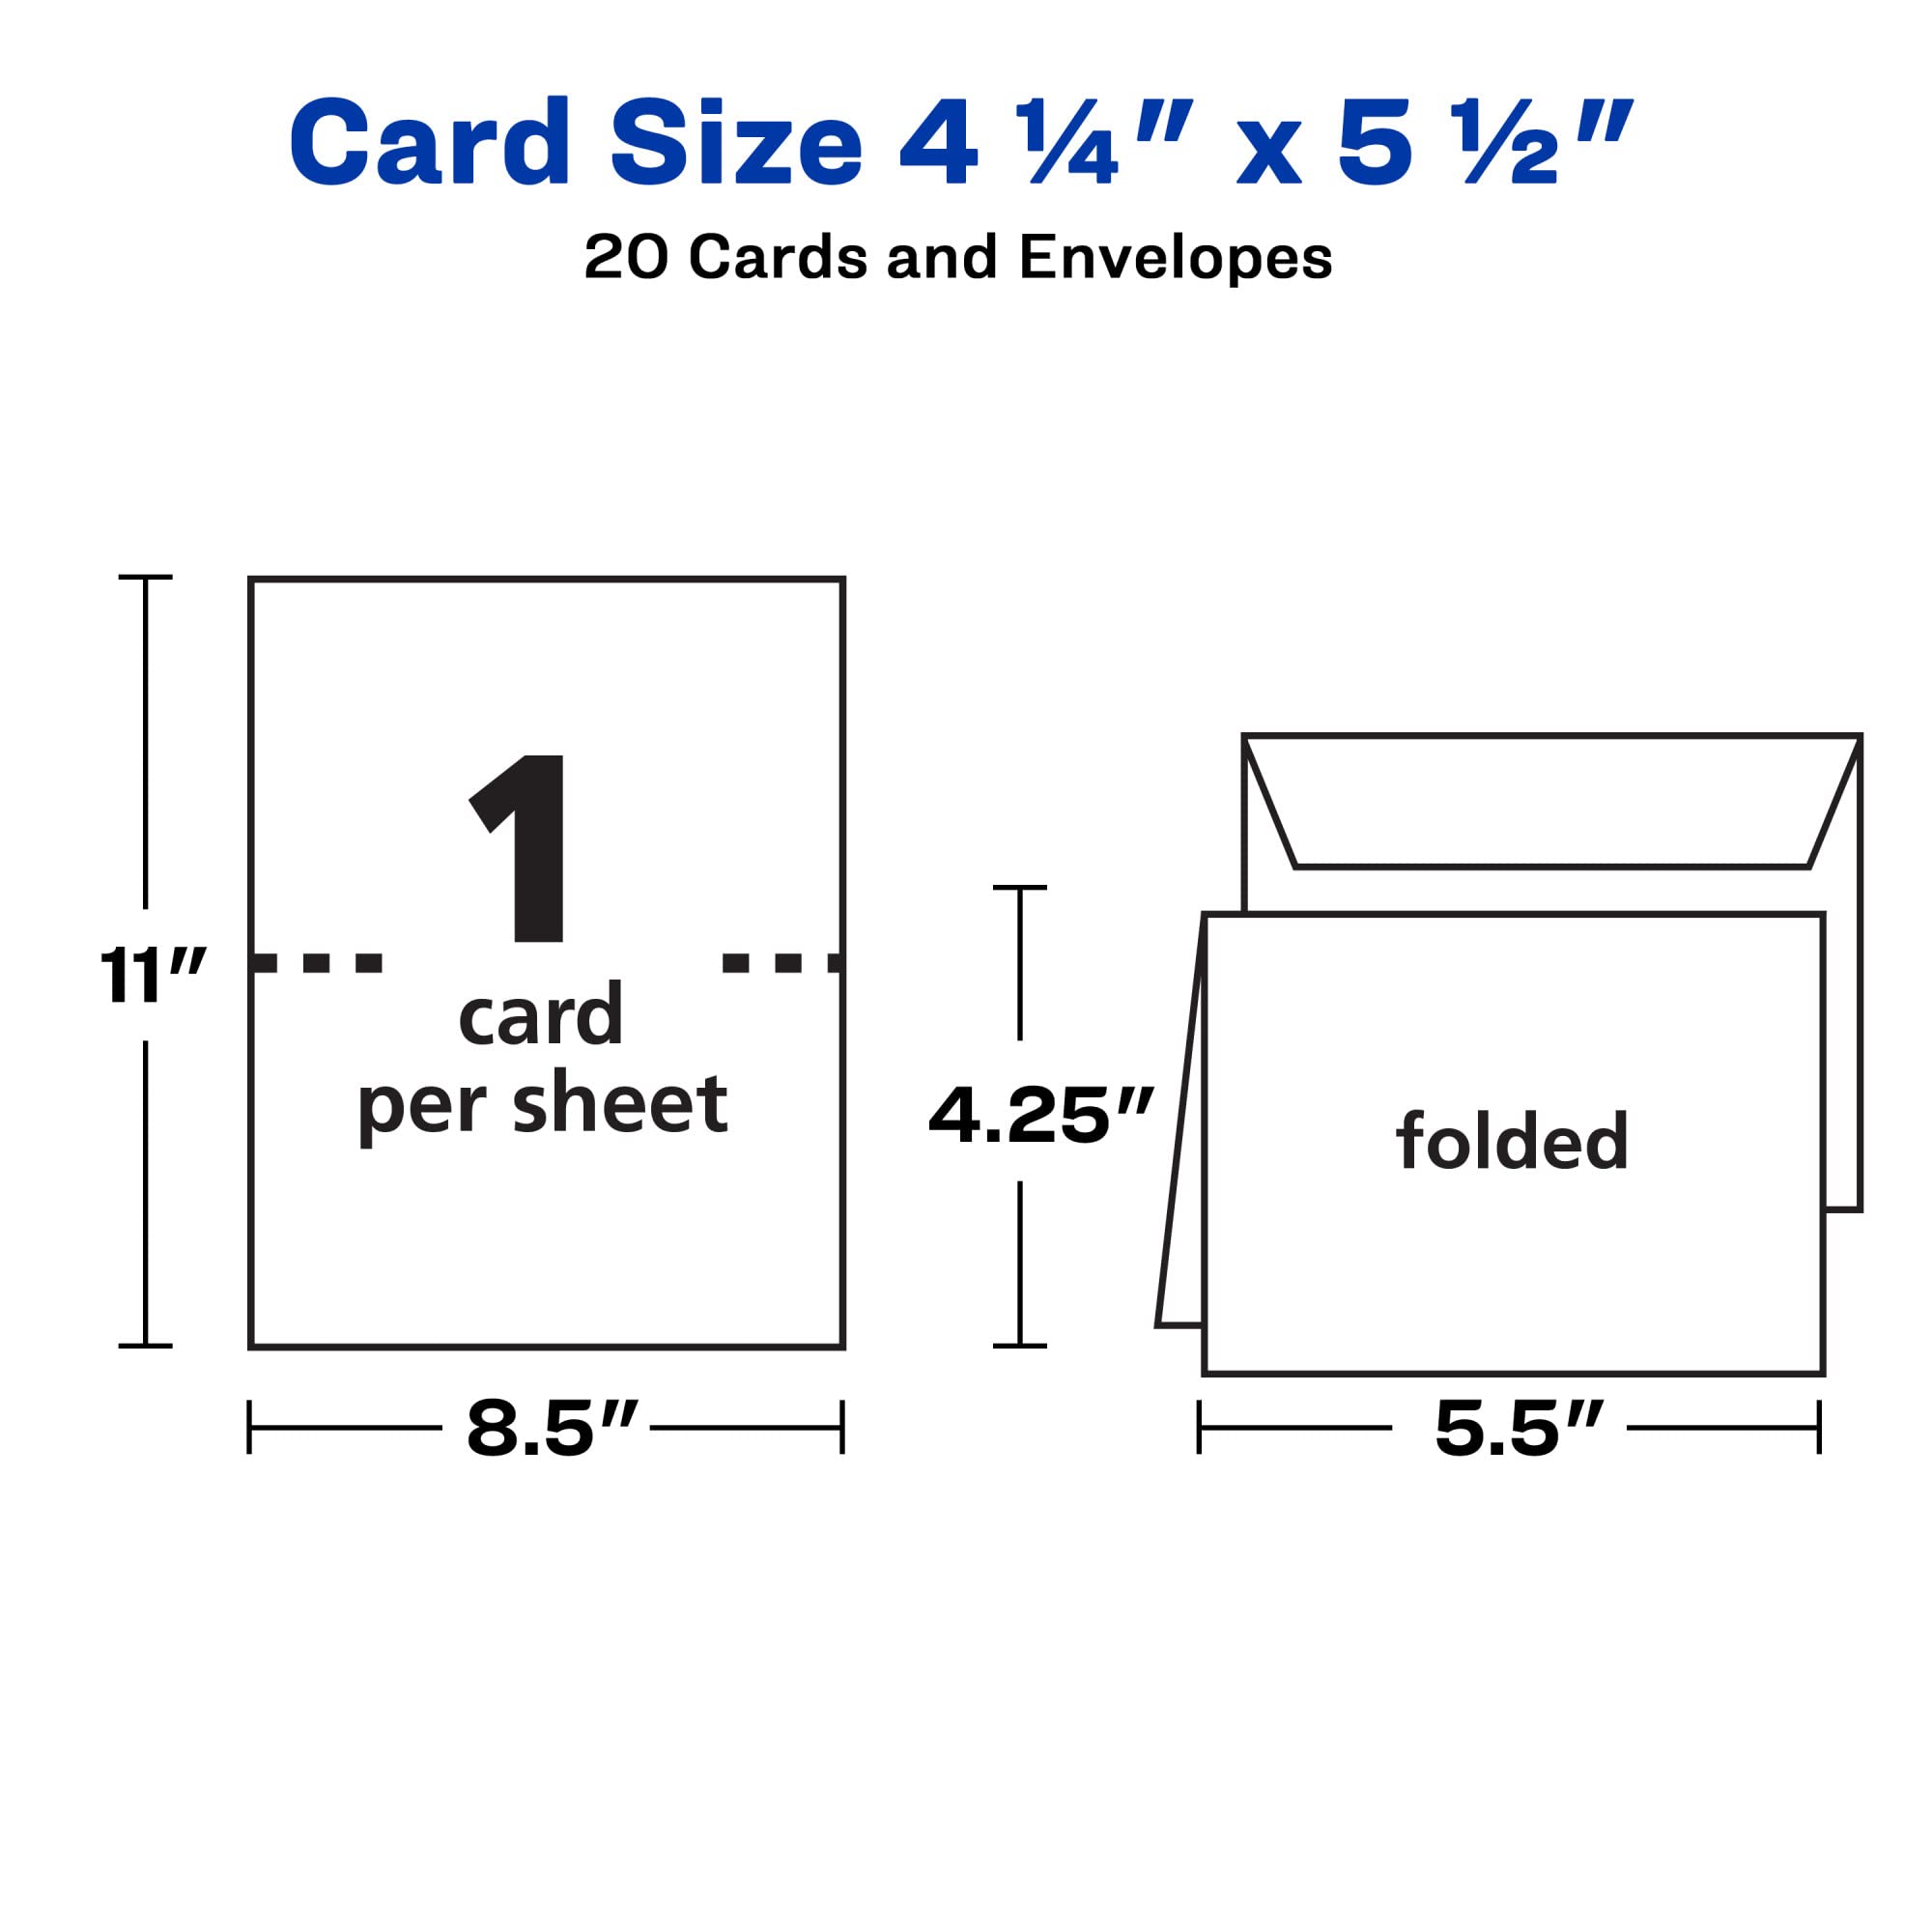 Avery Printable Greeting Cards, Quarter-Fold, 4.25